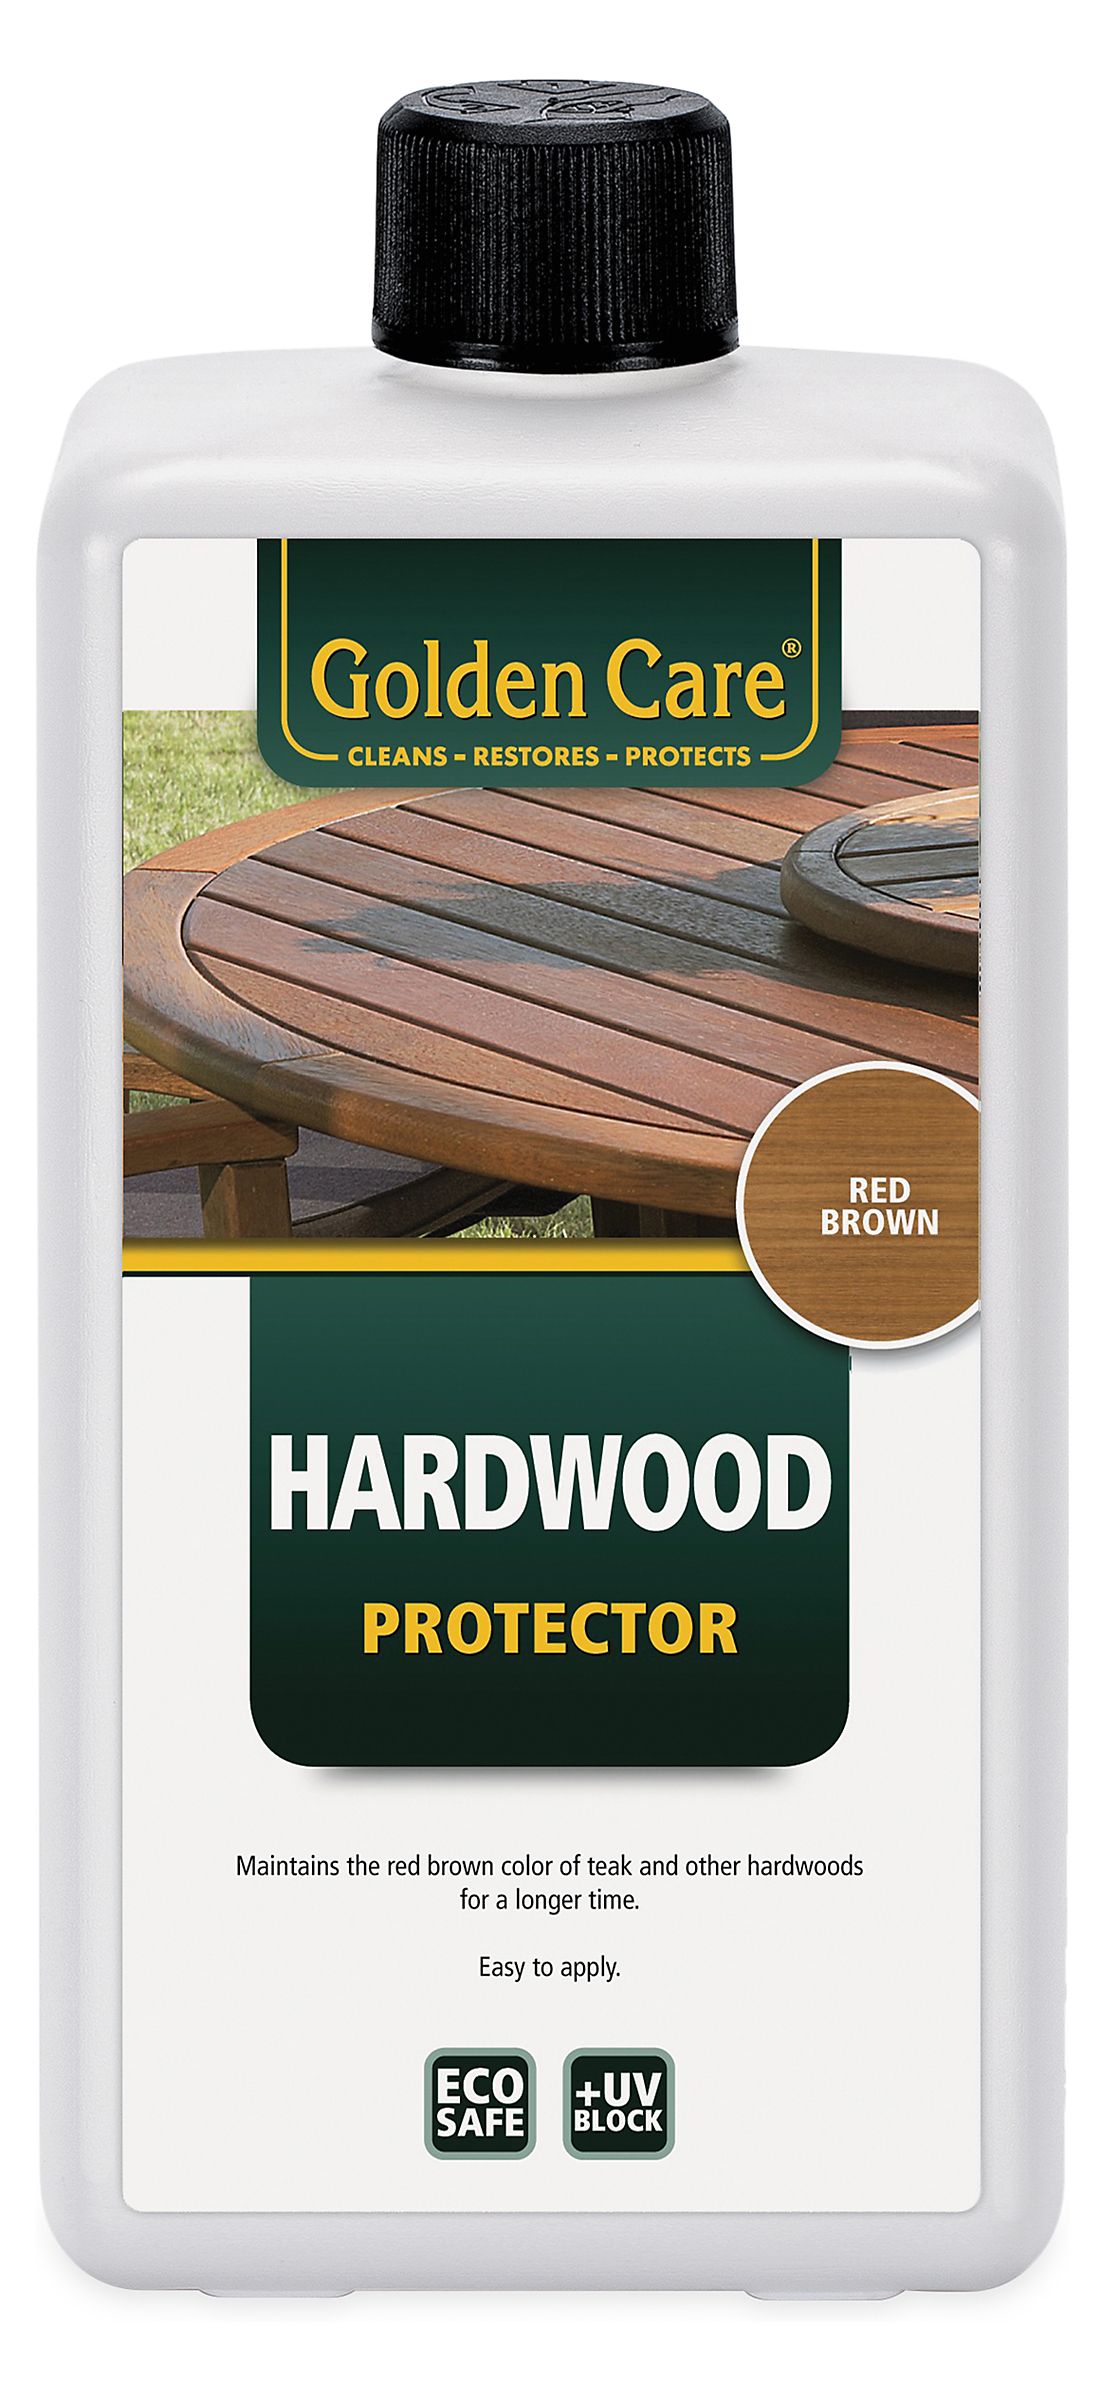 Outdoor Wood Protector for Ipe or Hardwood - 1 liter Bottle